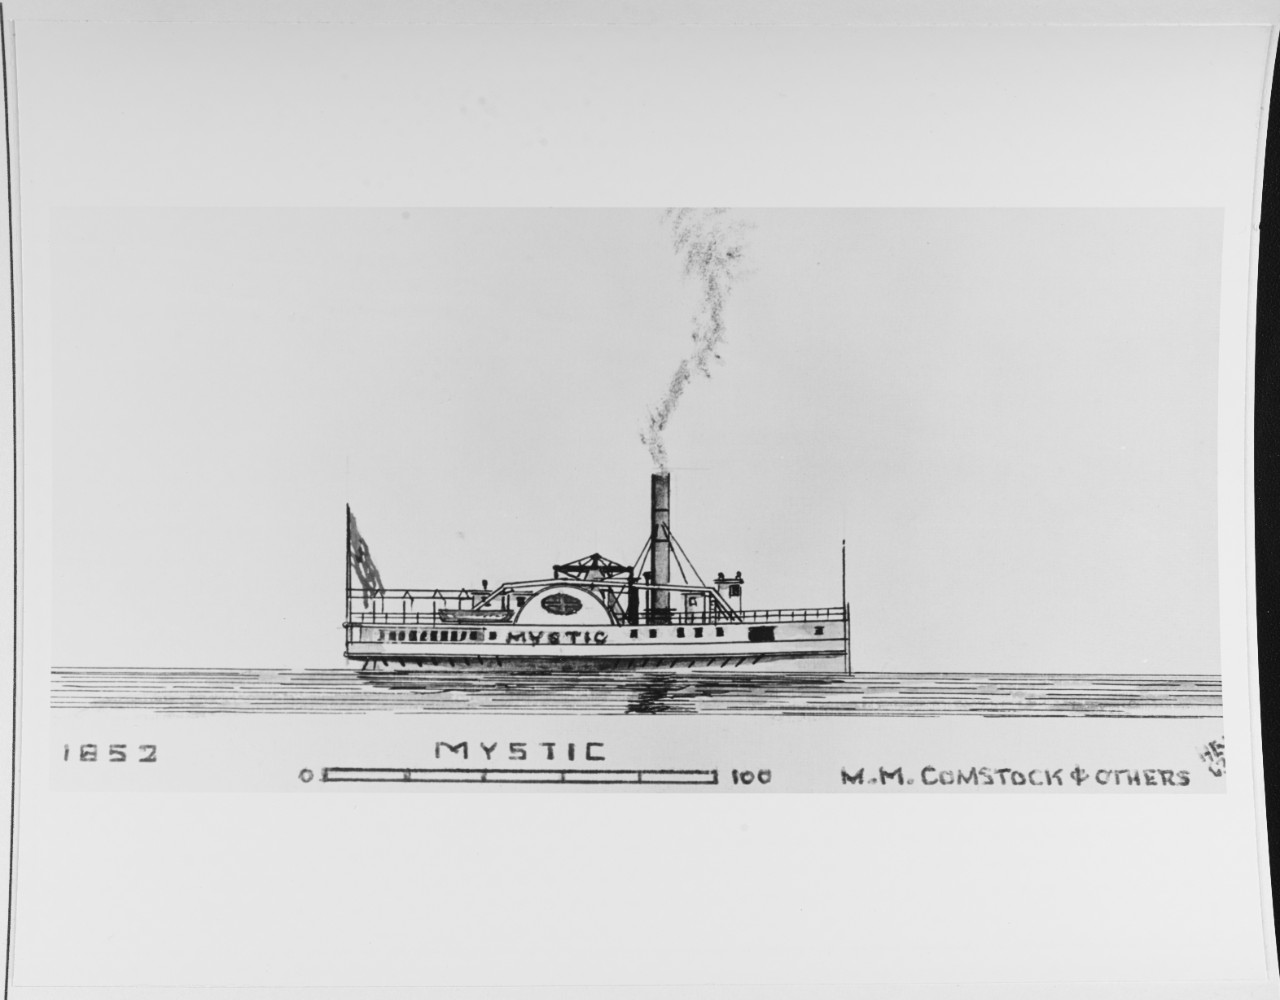 MYSTIC (American merchant steamer, 1852-1865)